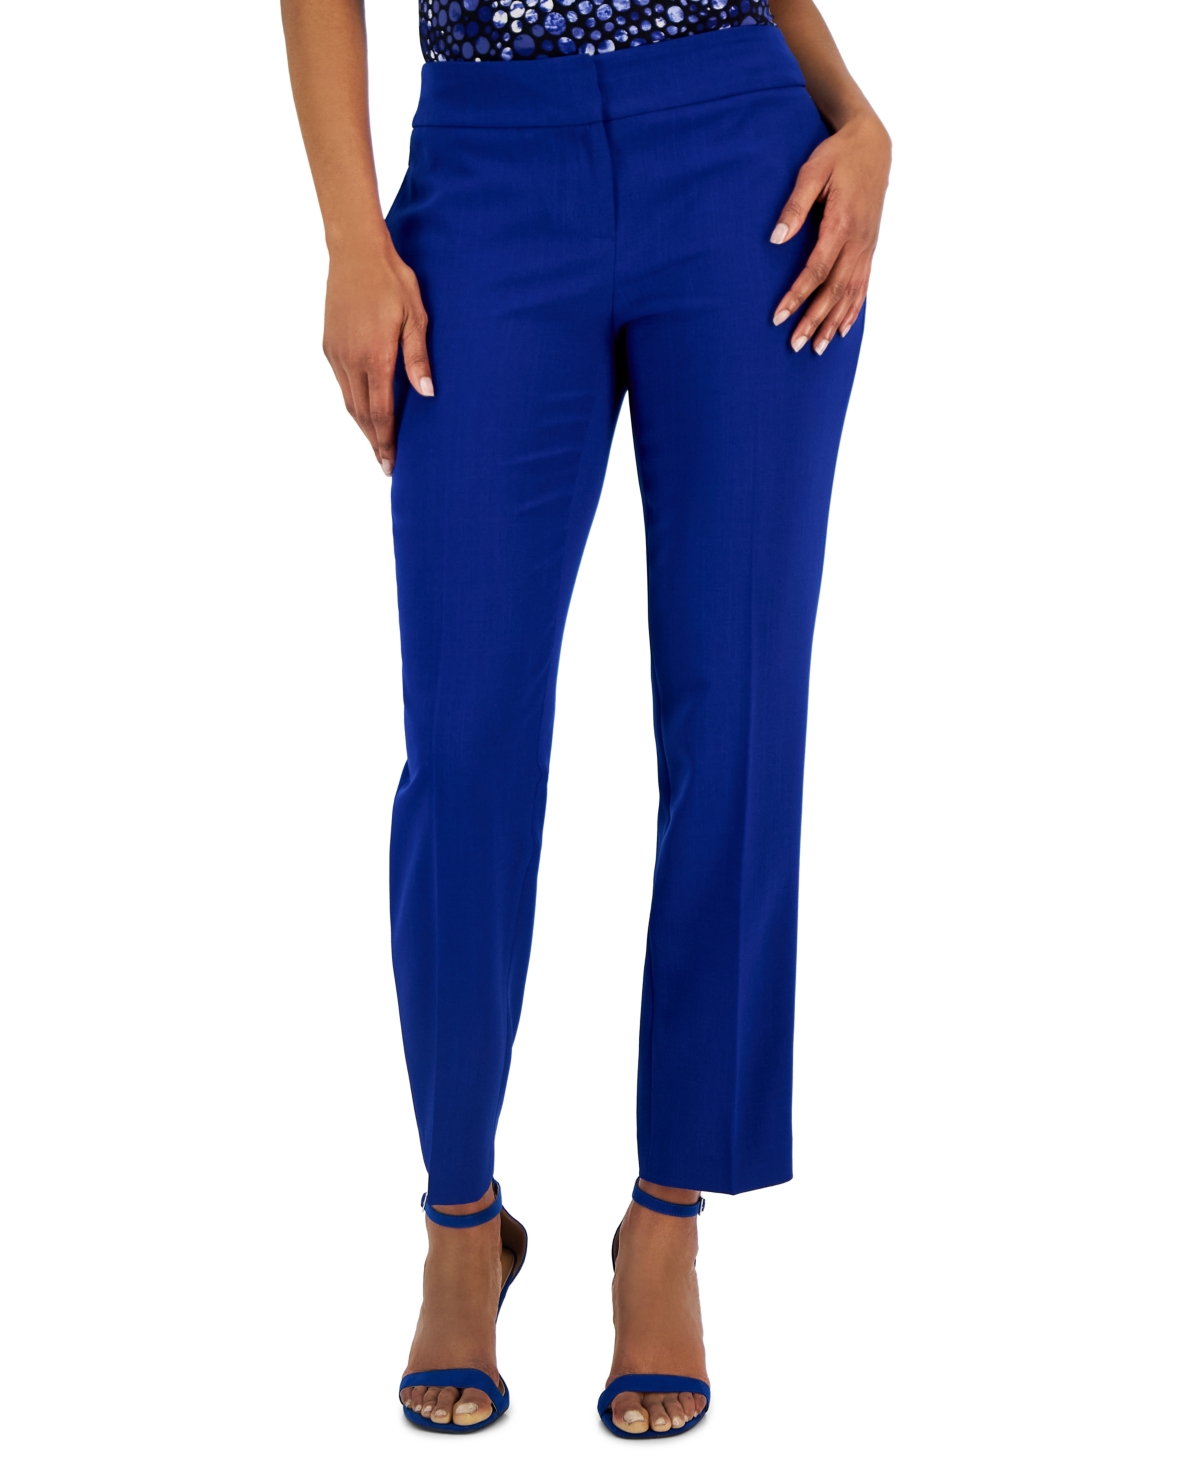 Blue Dress Pants - Stretch Crepe Pants